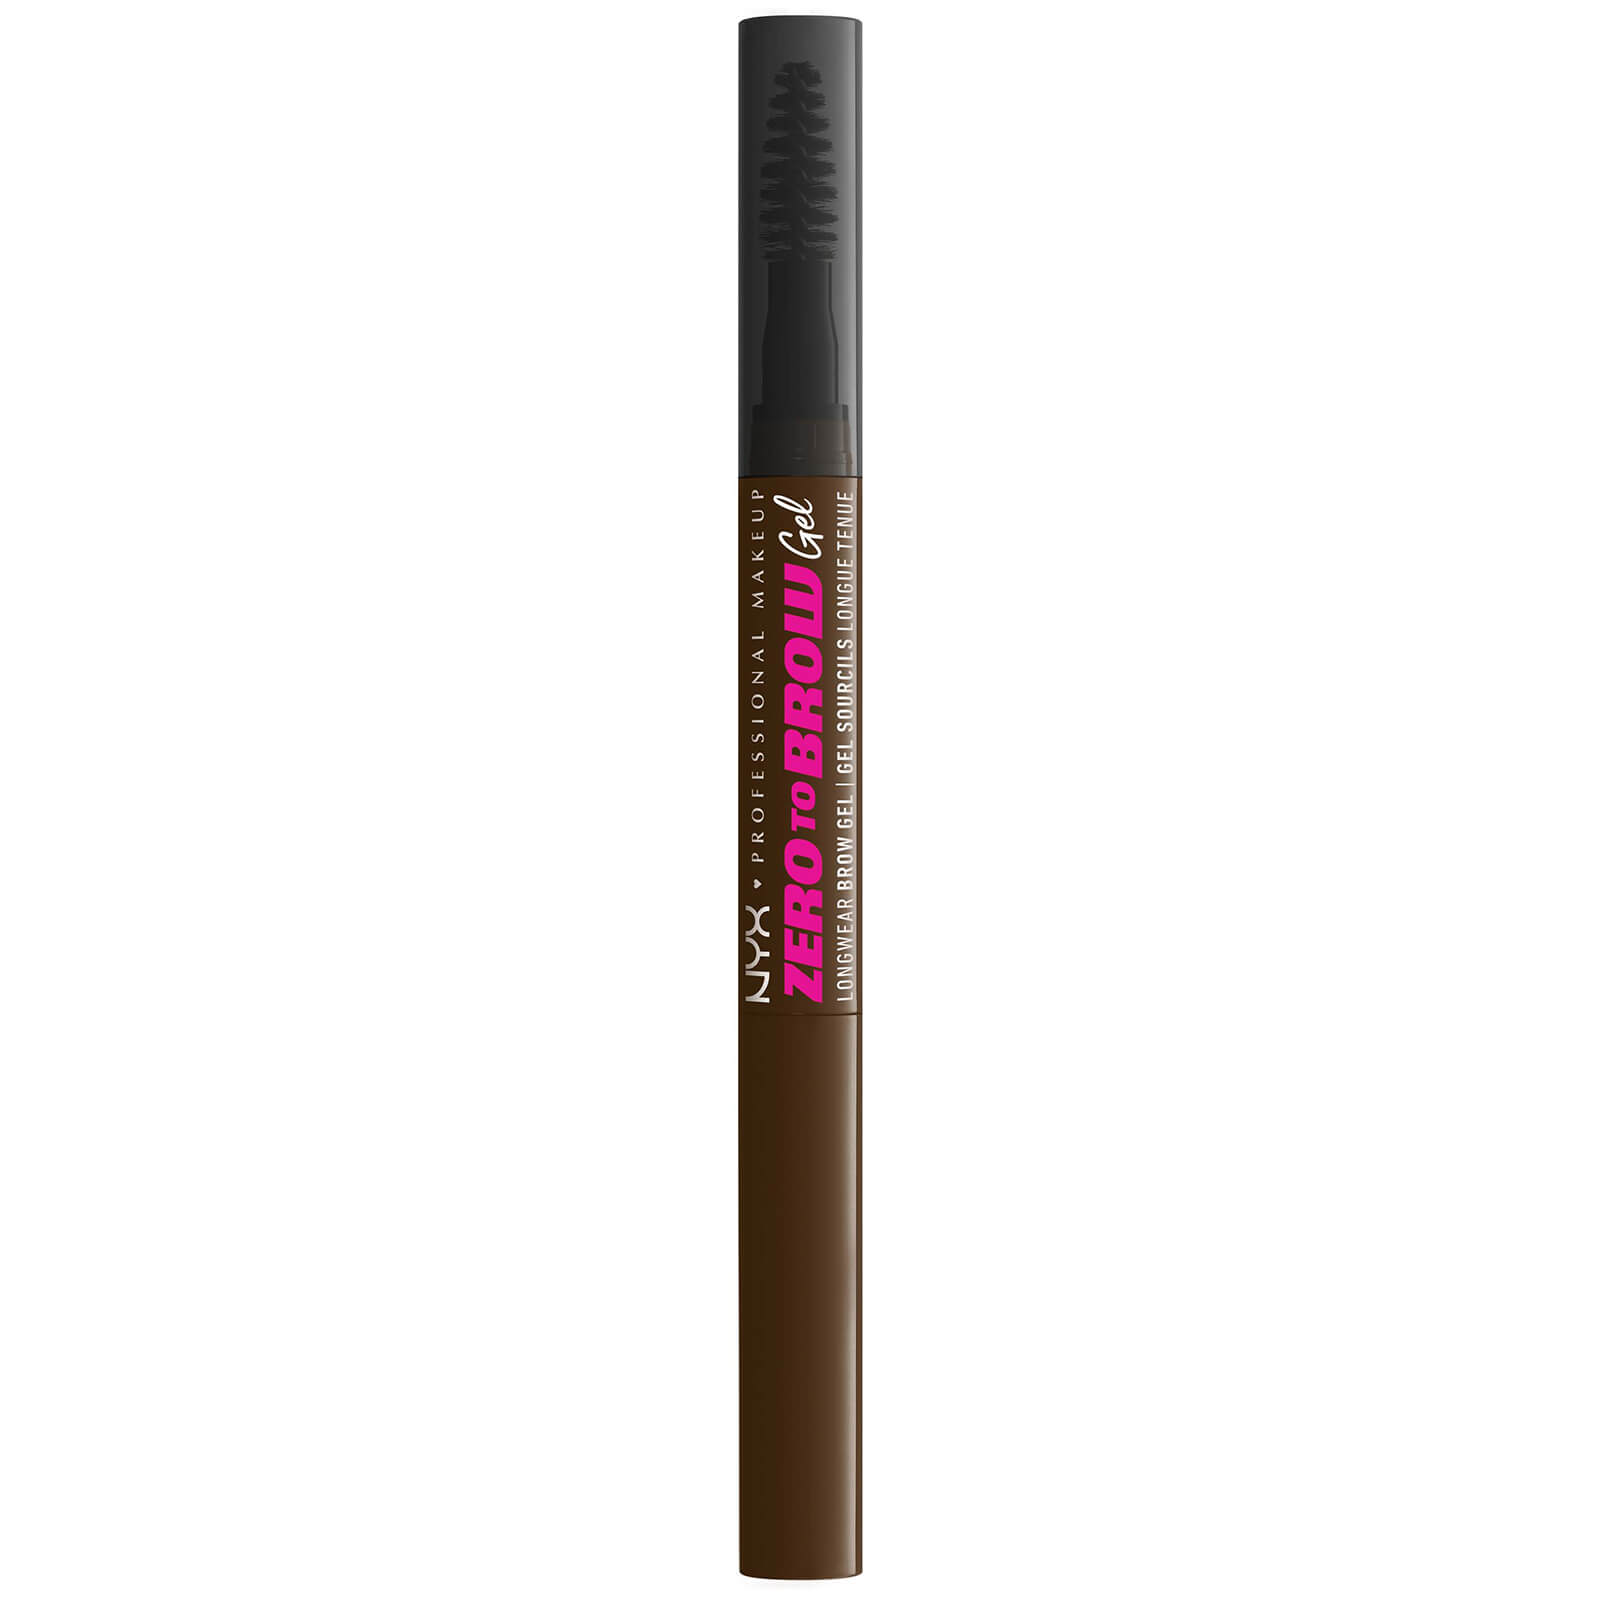 Image of NYX Professional Makeup Zero To Brow Longwear Vegan Tinted Eyebrow Gel 13g (Various Shades) - Chocolate